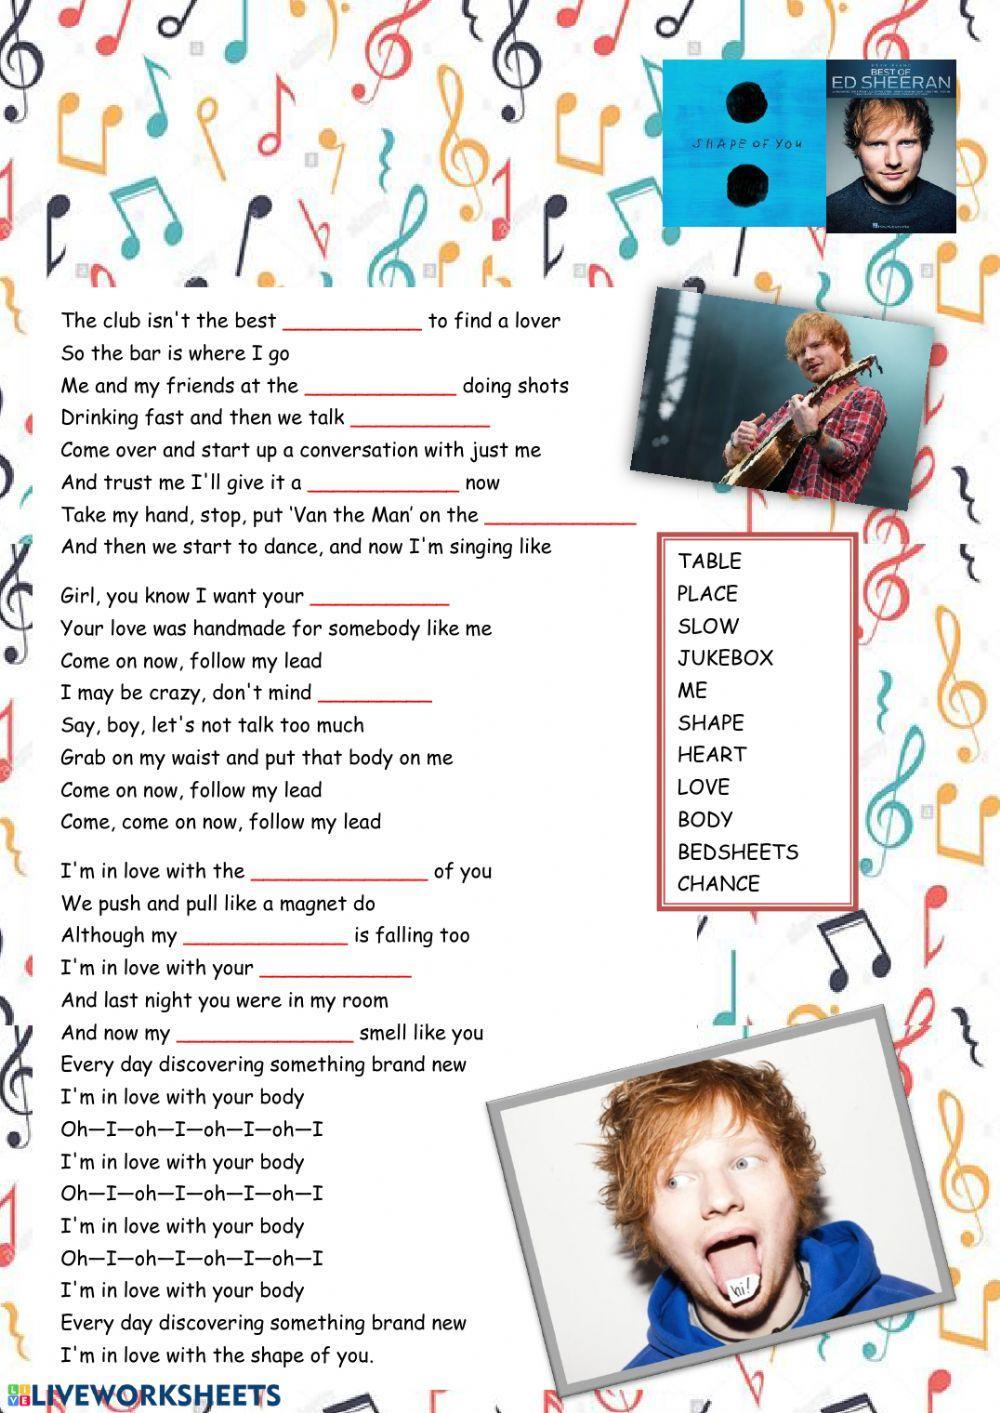 Ed Sheeran - Shape of You (Legendado